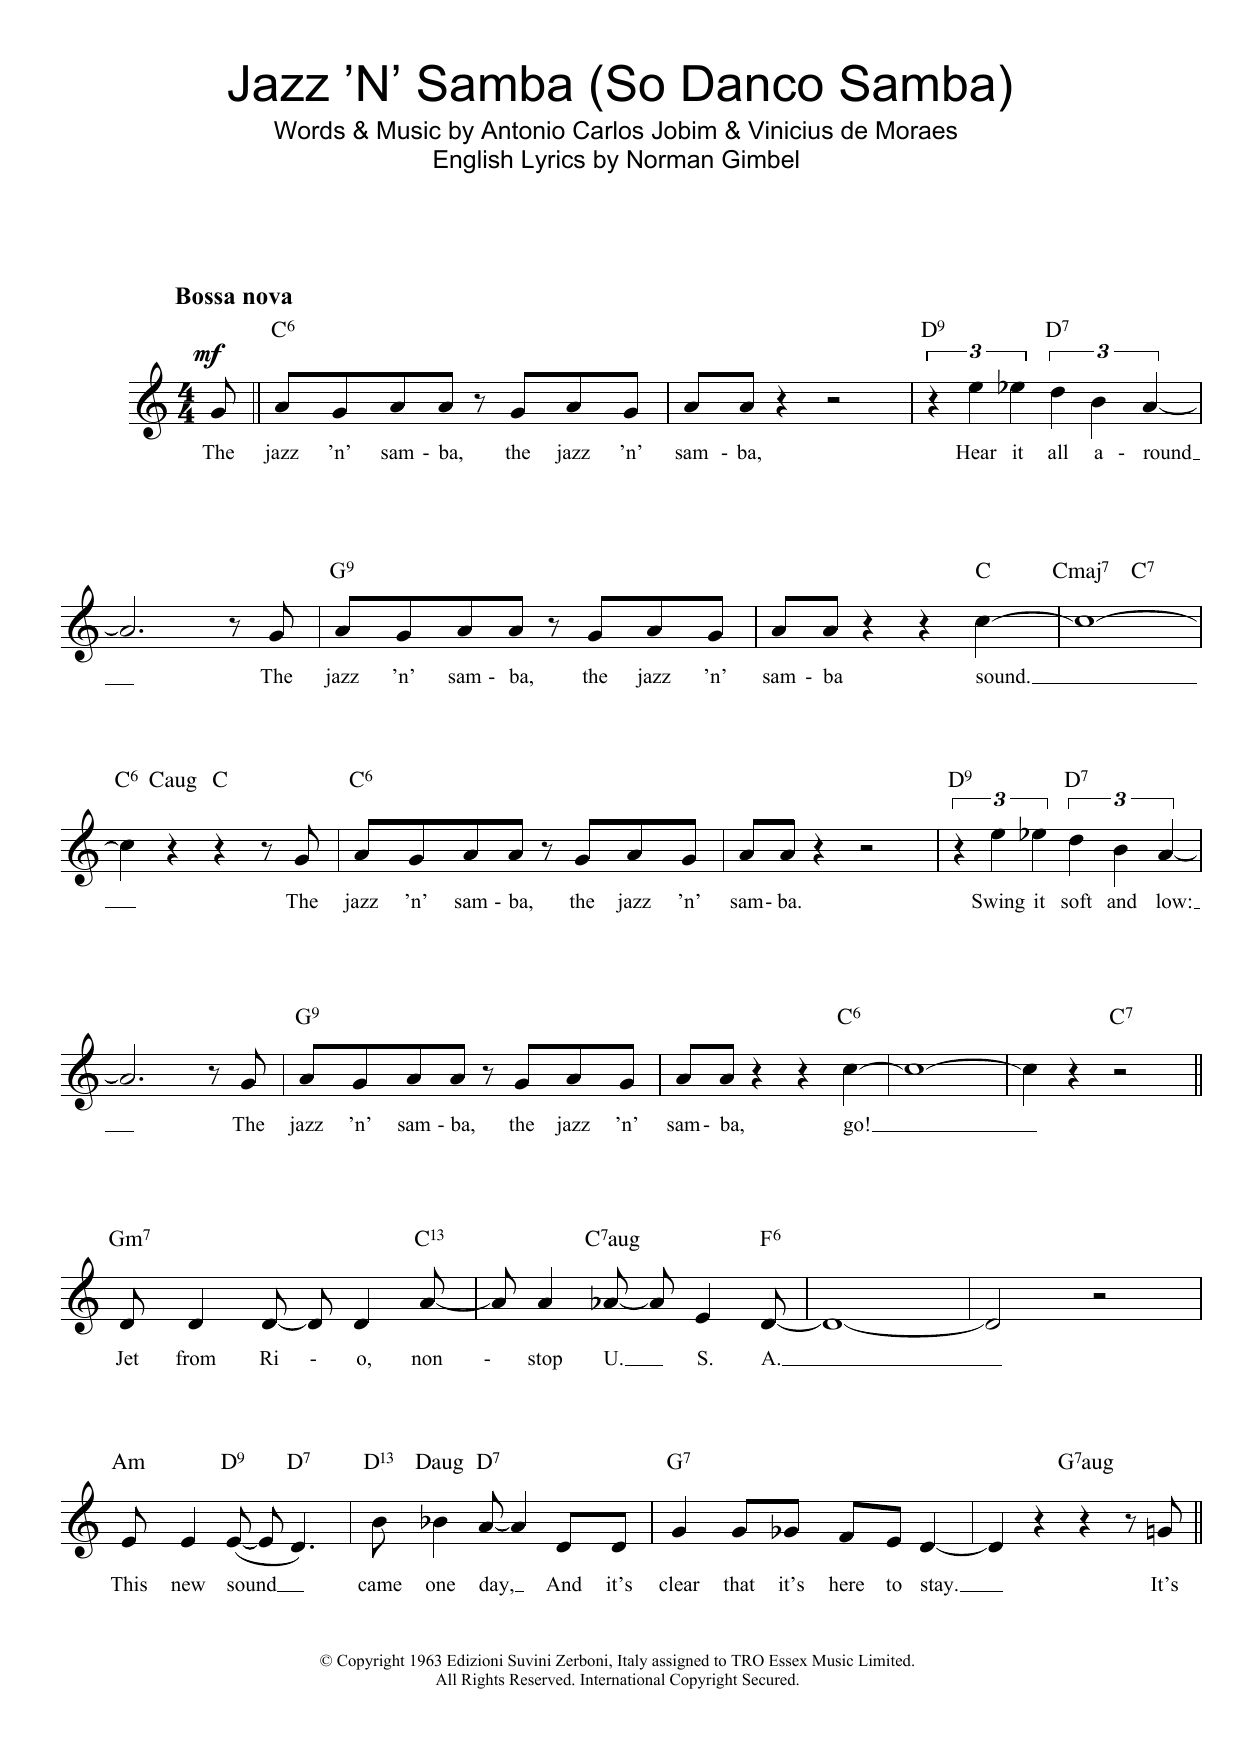 Download Antonio Carlos Jobim Jazz 'N' Samba (Só Danço Samba) Sheet Music and learn how to play Easy Guitar Tab PDF digital score in minutes